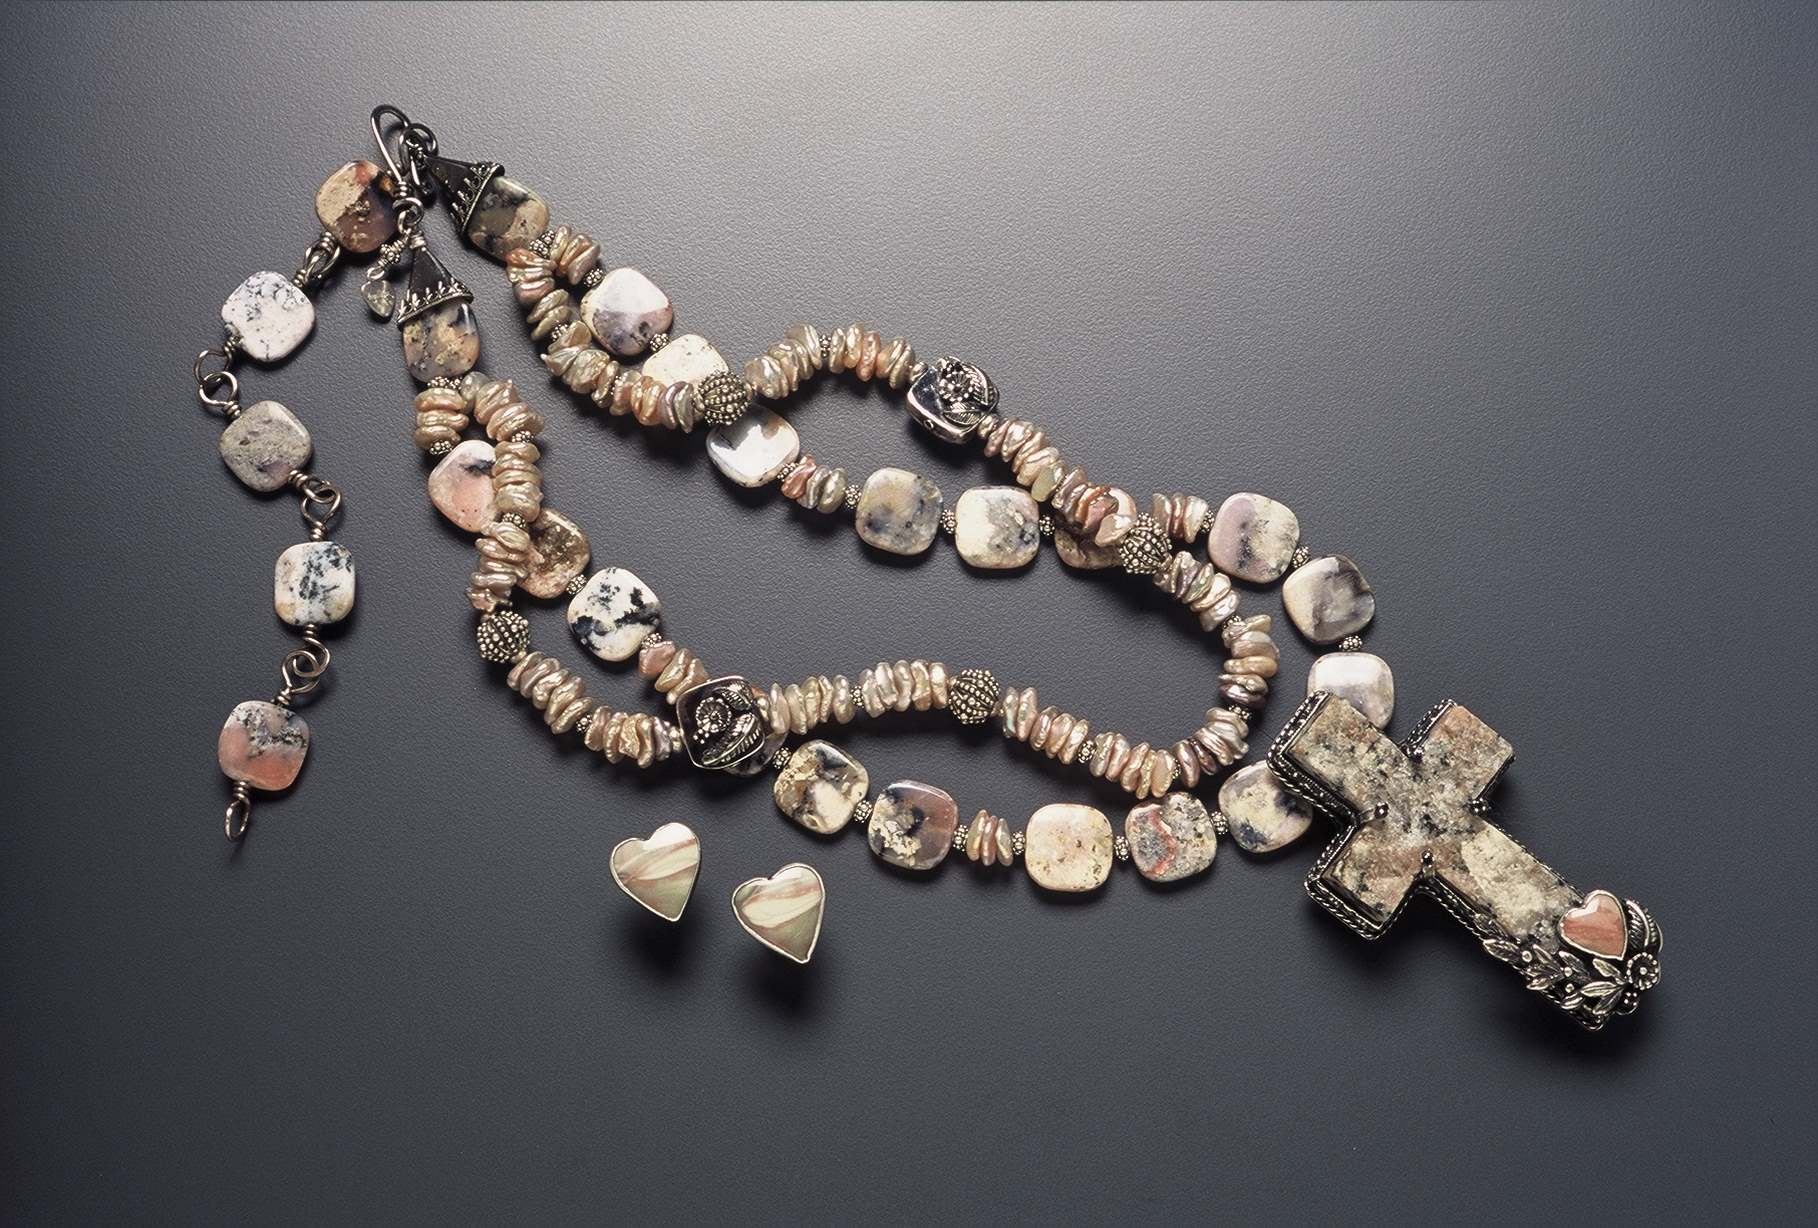 Detail of Granite Cross Necklace